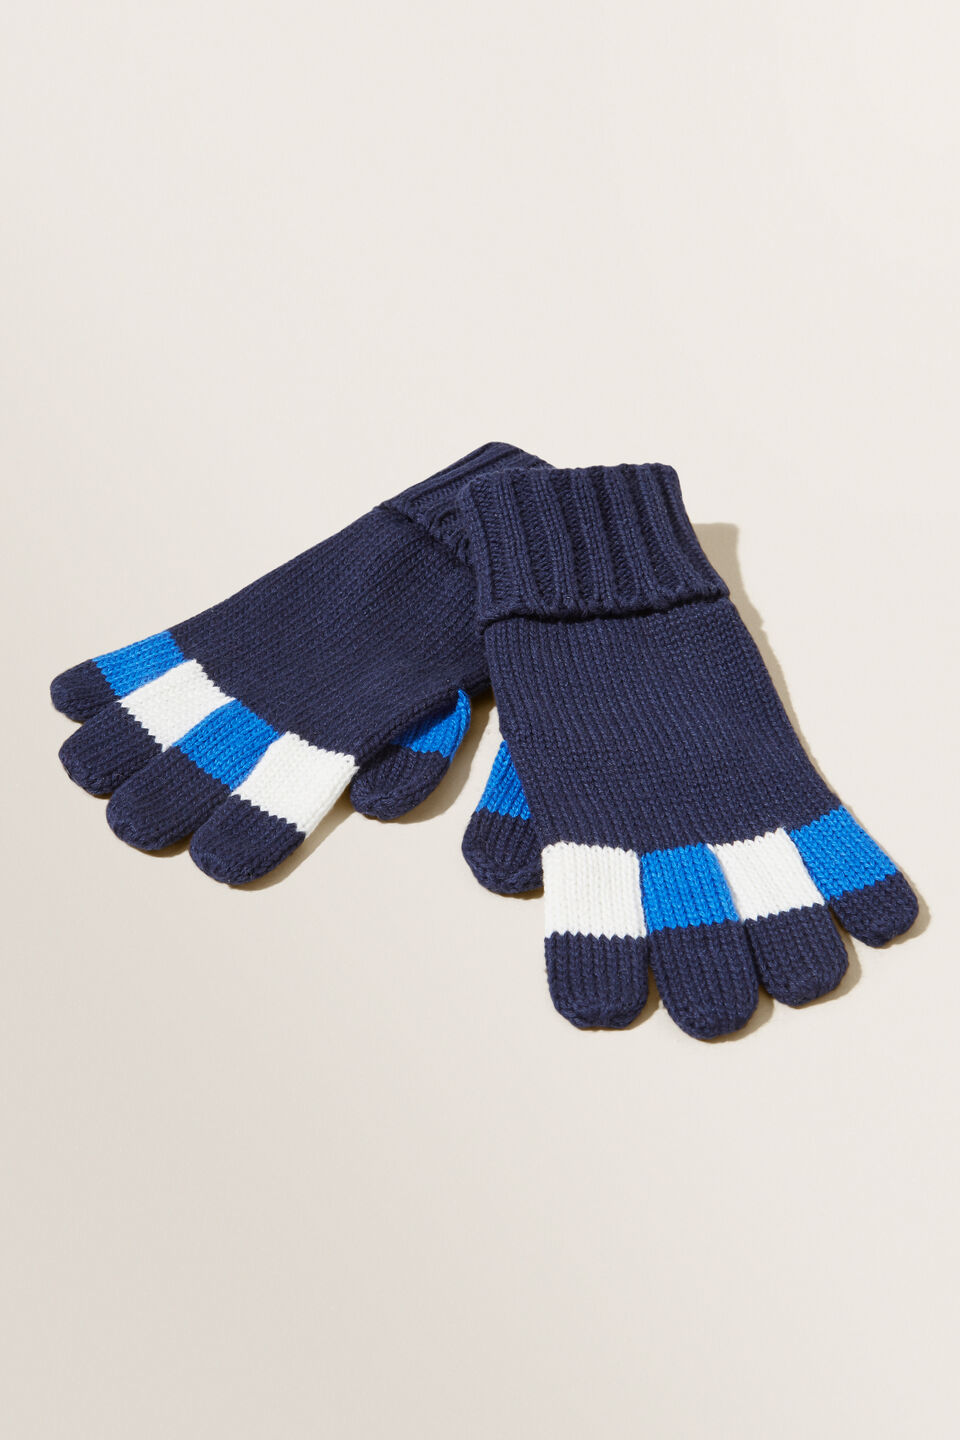 Colour Block Gloves  Multi